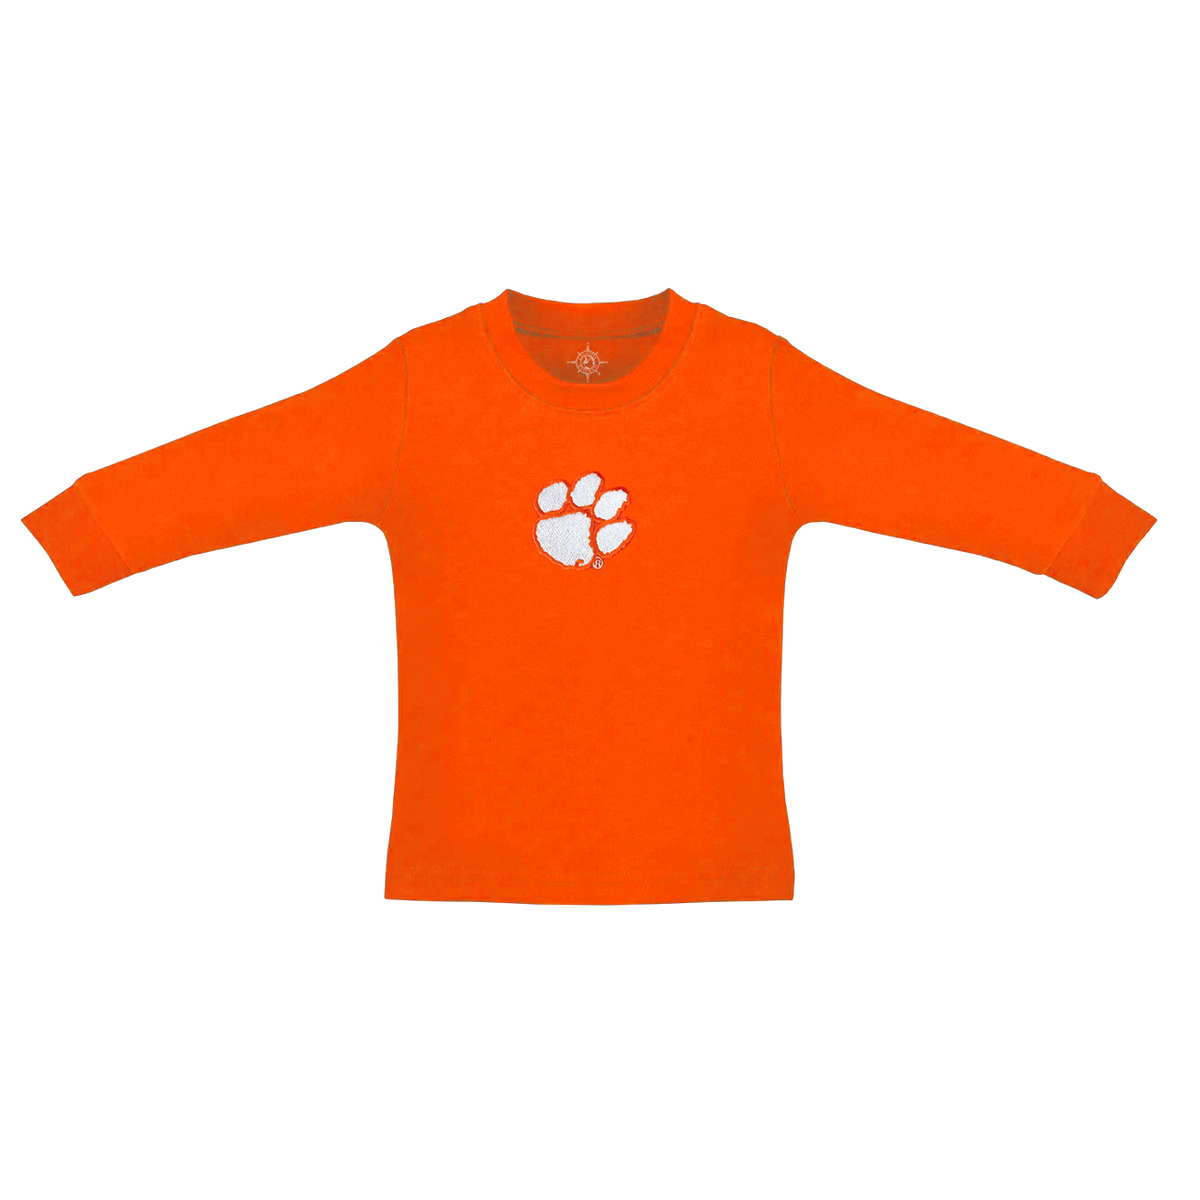 Clemson Classic Orange Long Sleeve Infant Shirt with Paw